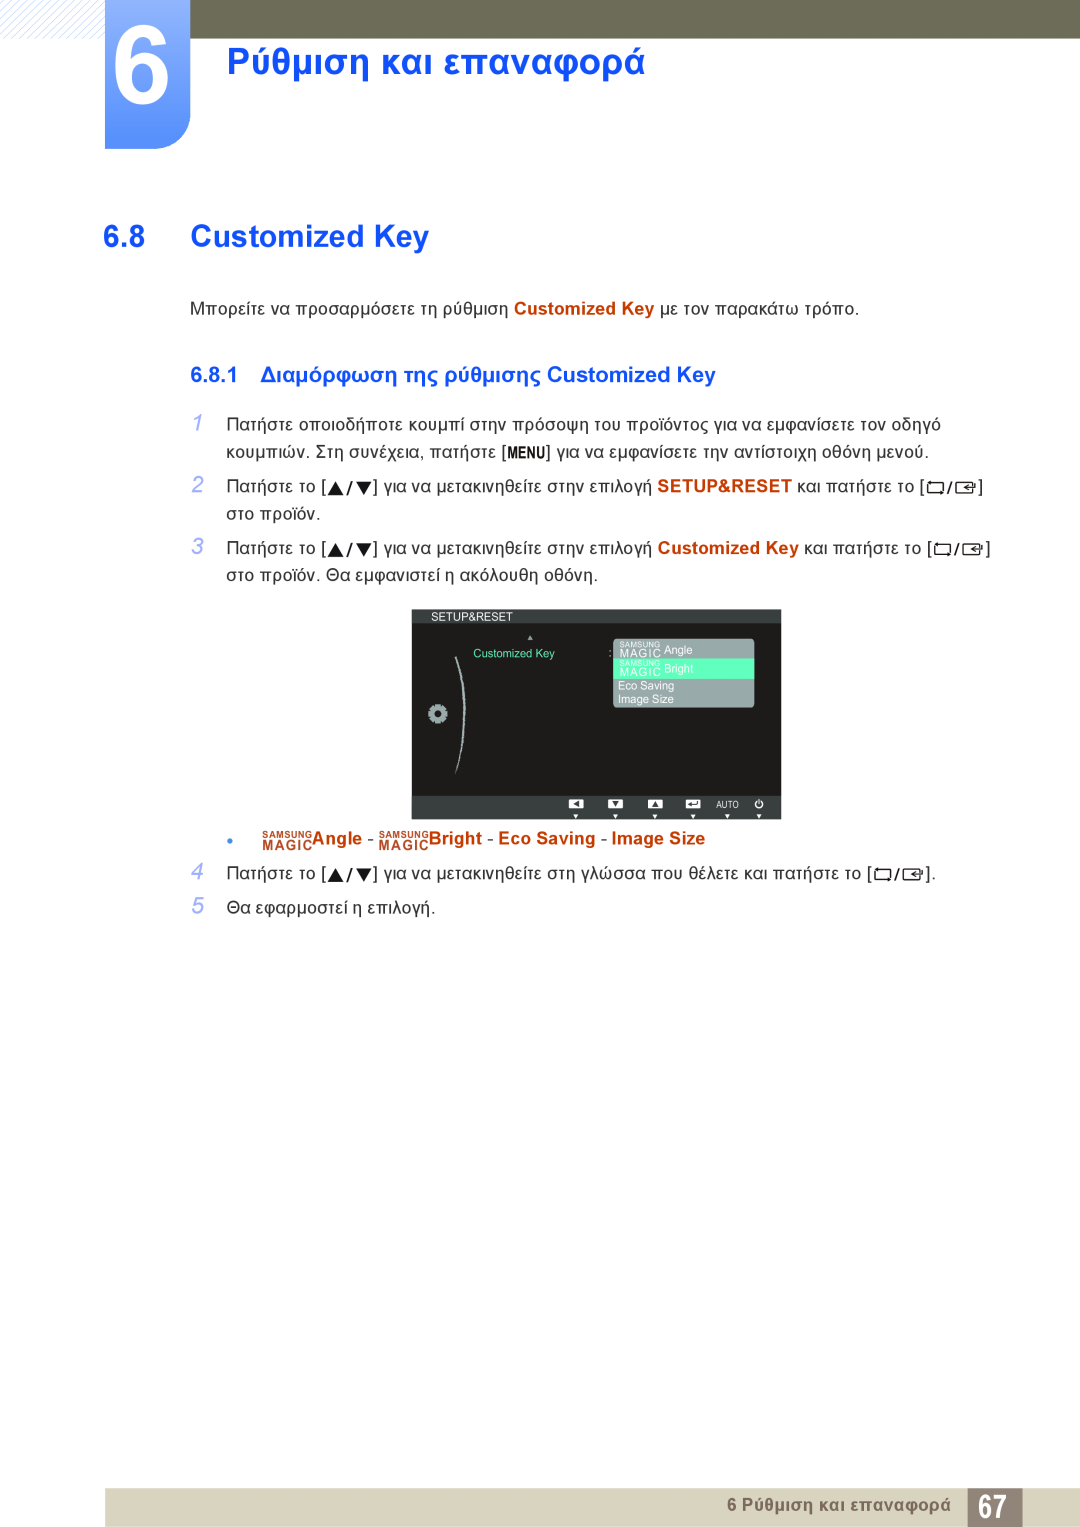 Samsung LS22C45KMW/EN, LS22C45KMS/EN manual 6.8.1 Διαμόρφωση της ρύθμισης Customized Key, 6 Ρύθμιση και επαναφορά 